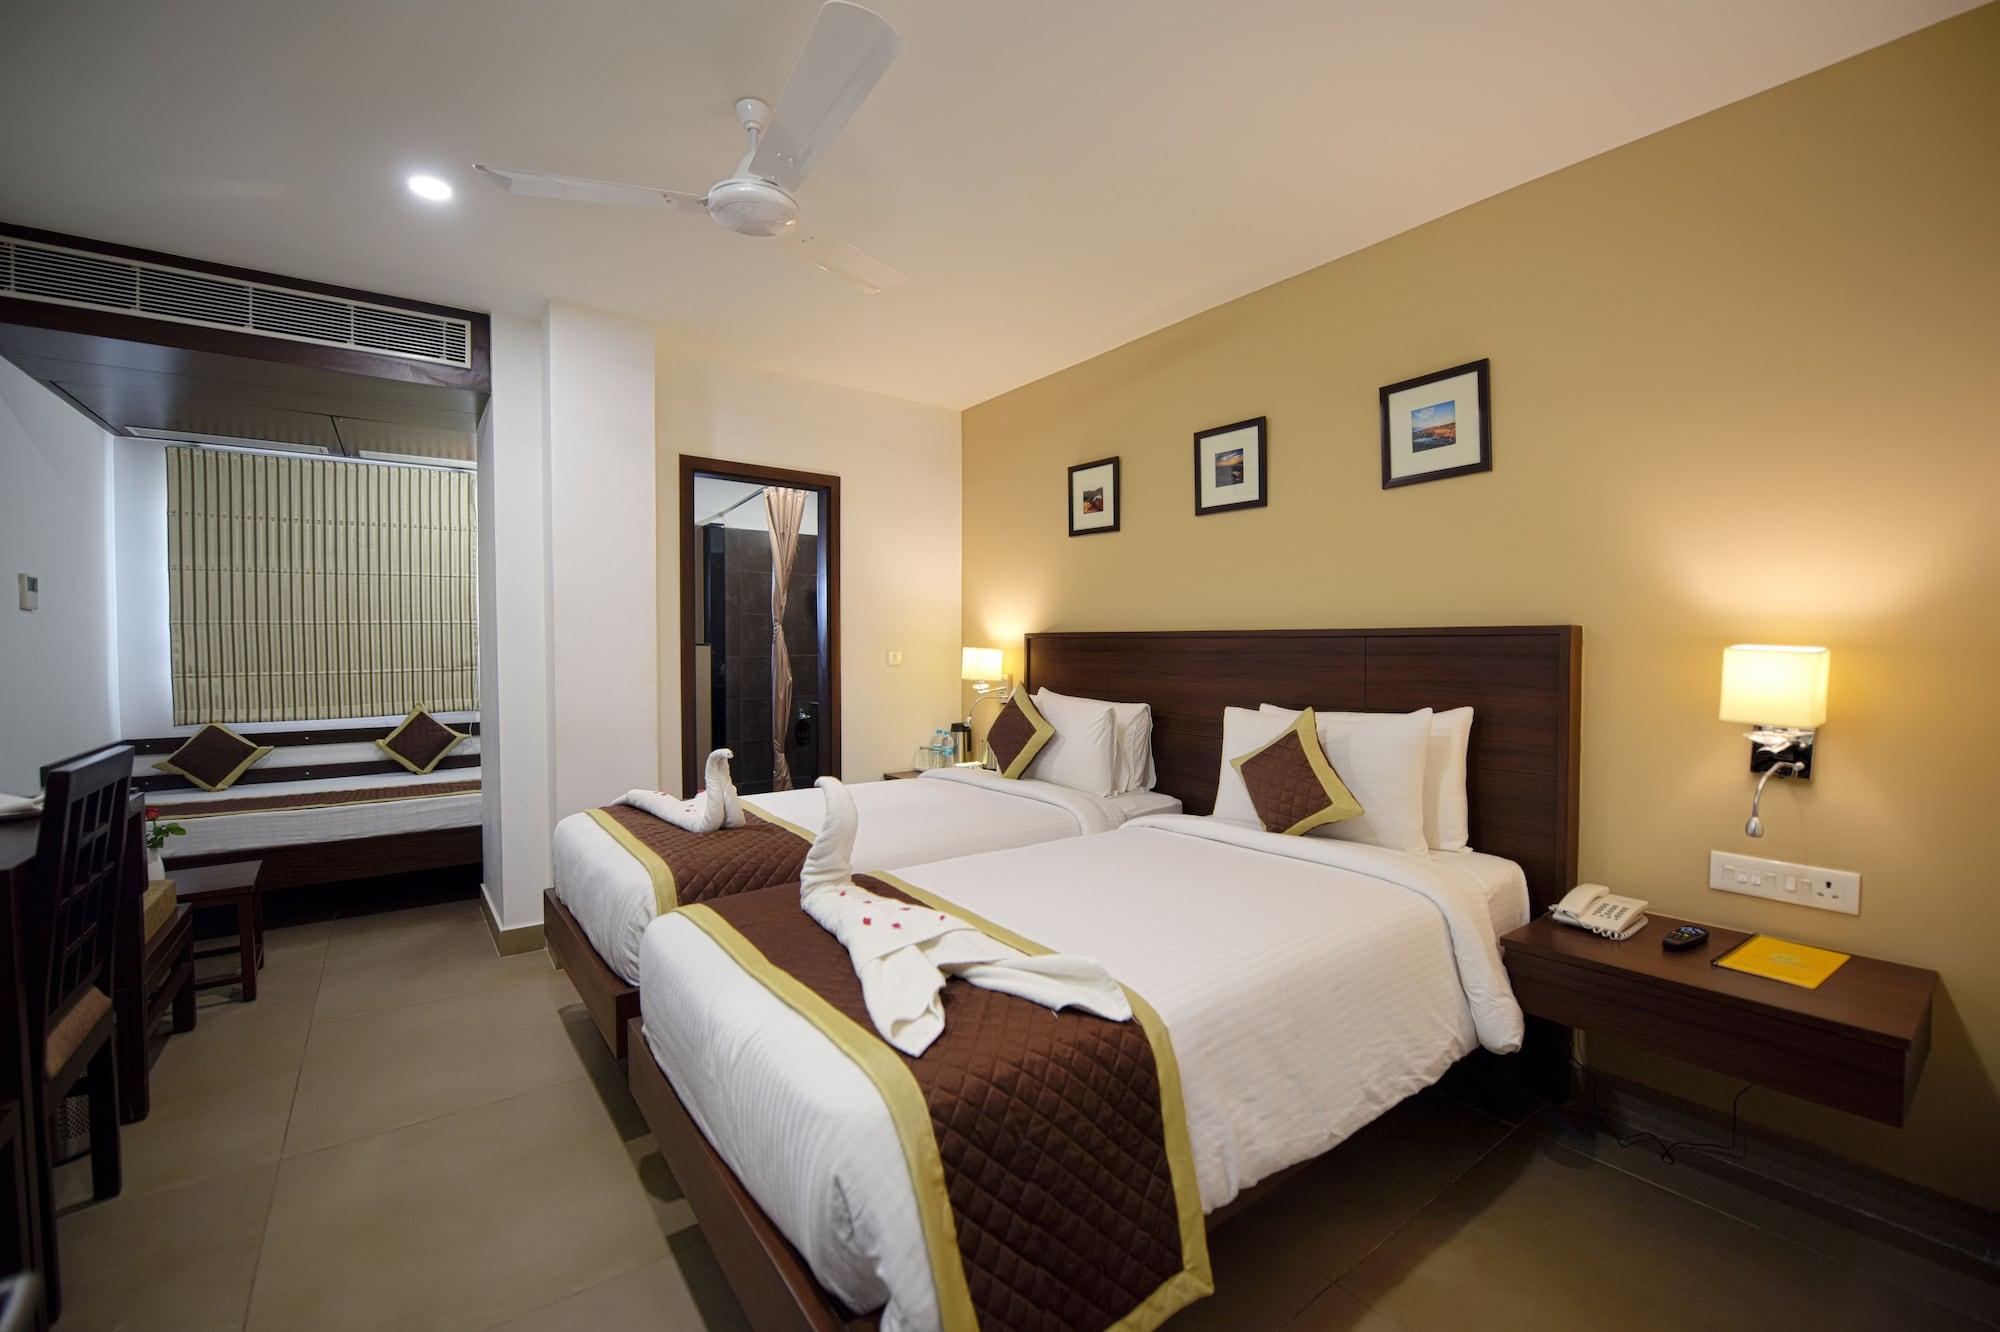 Hotel Gandharva- A Green Hotel Jaipur Exterior photo